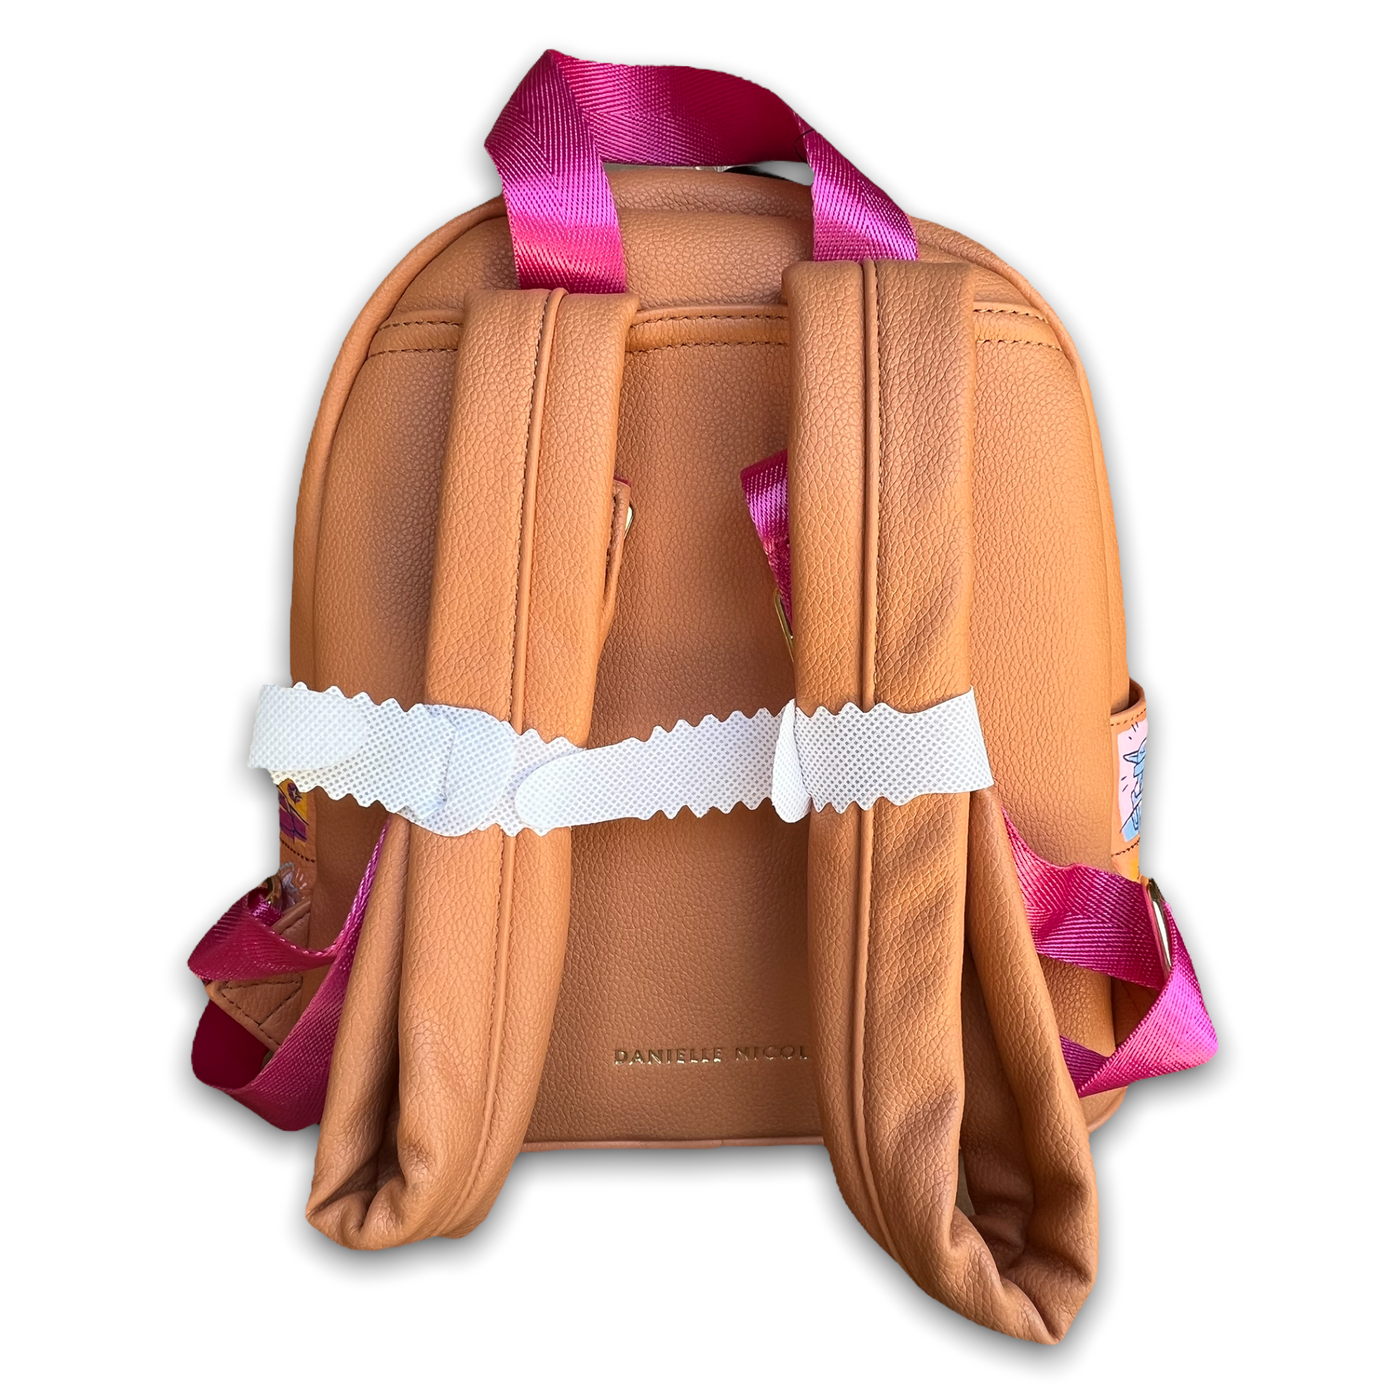 Danielle Nicole Star Wars Mandalorian Child Mini Backpack